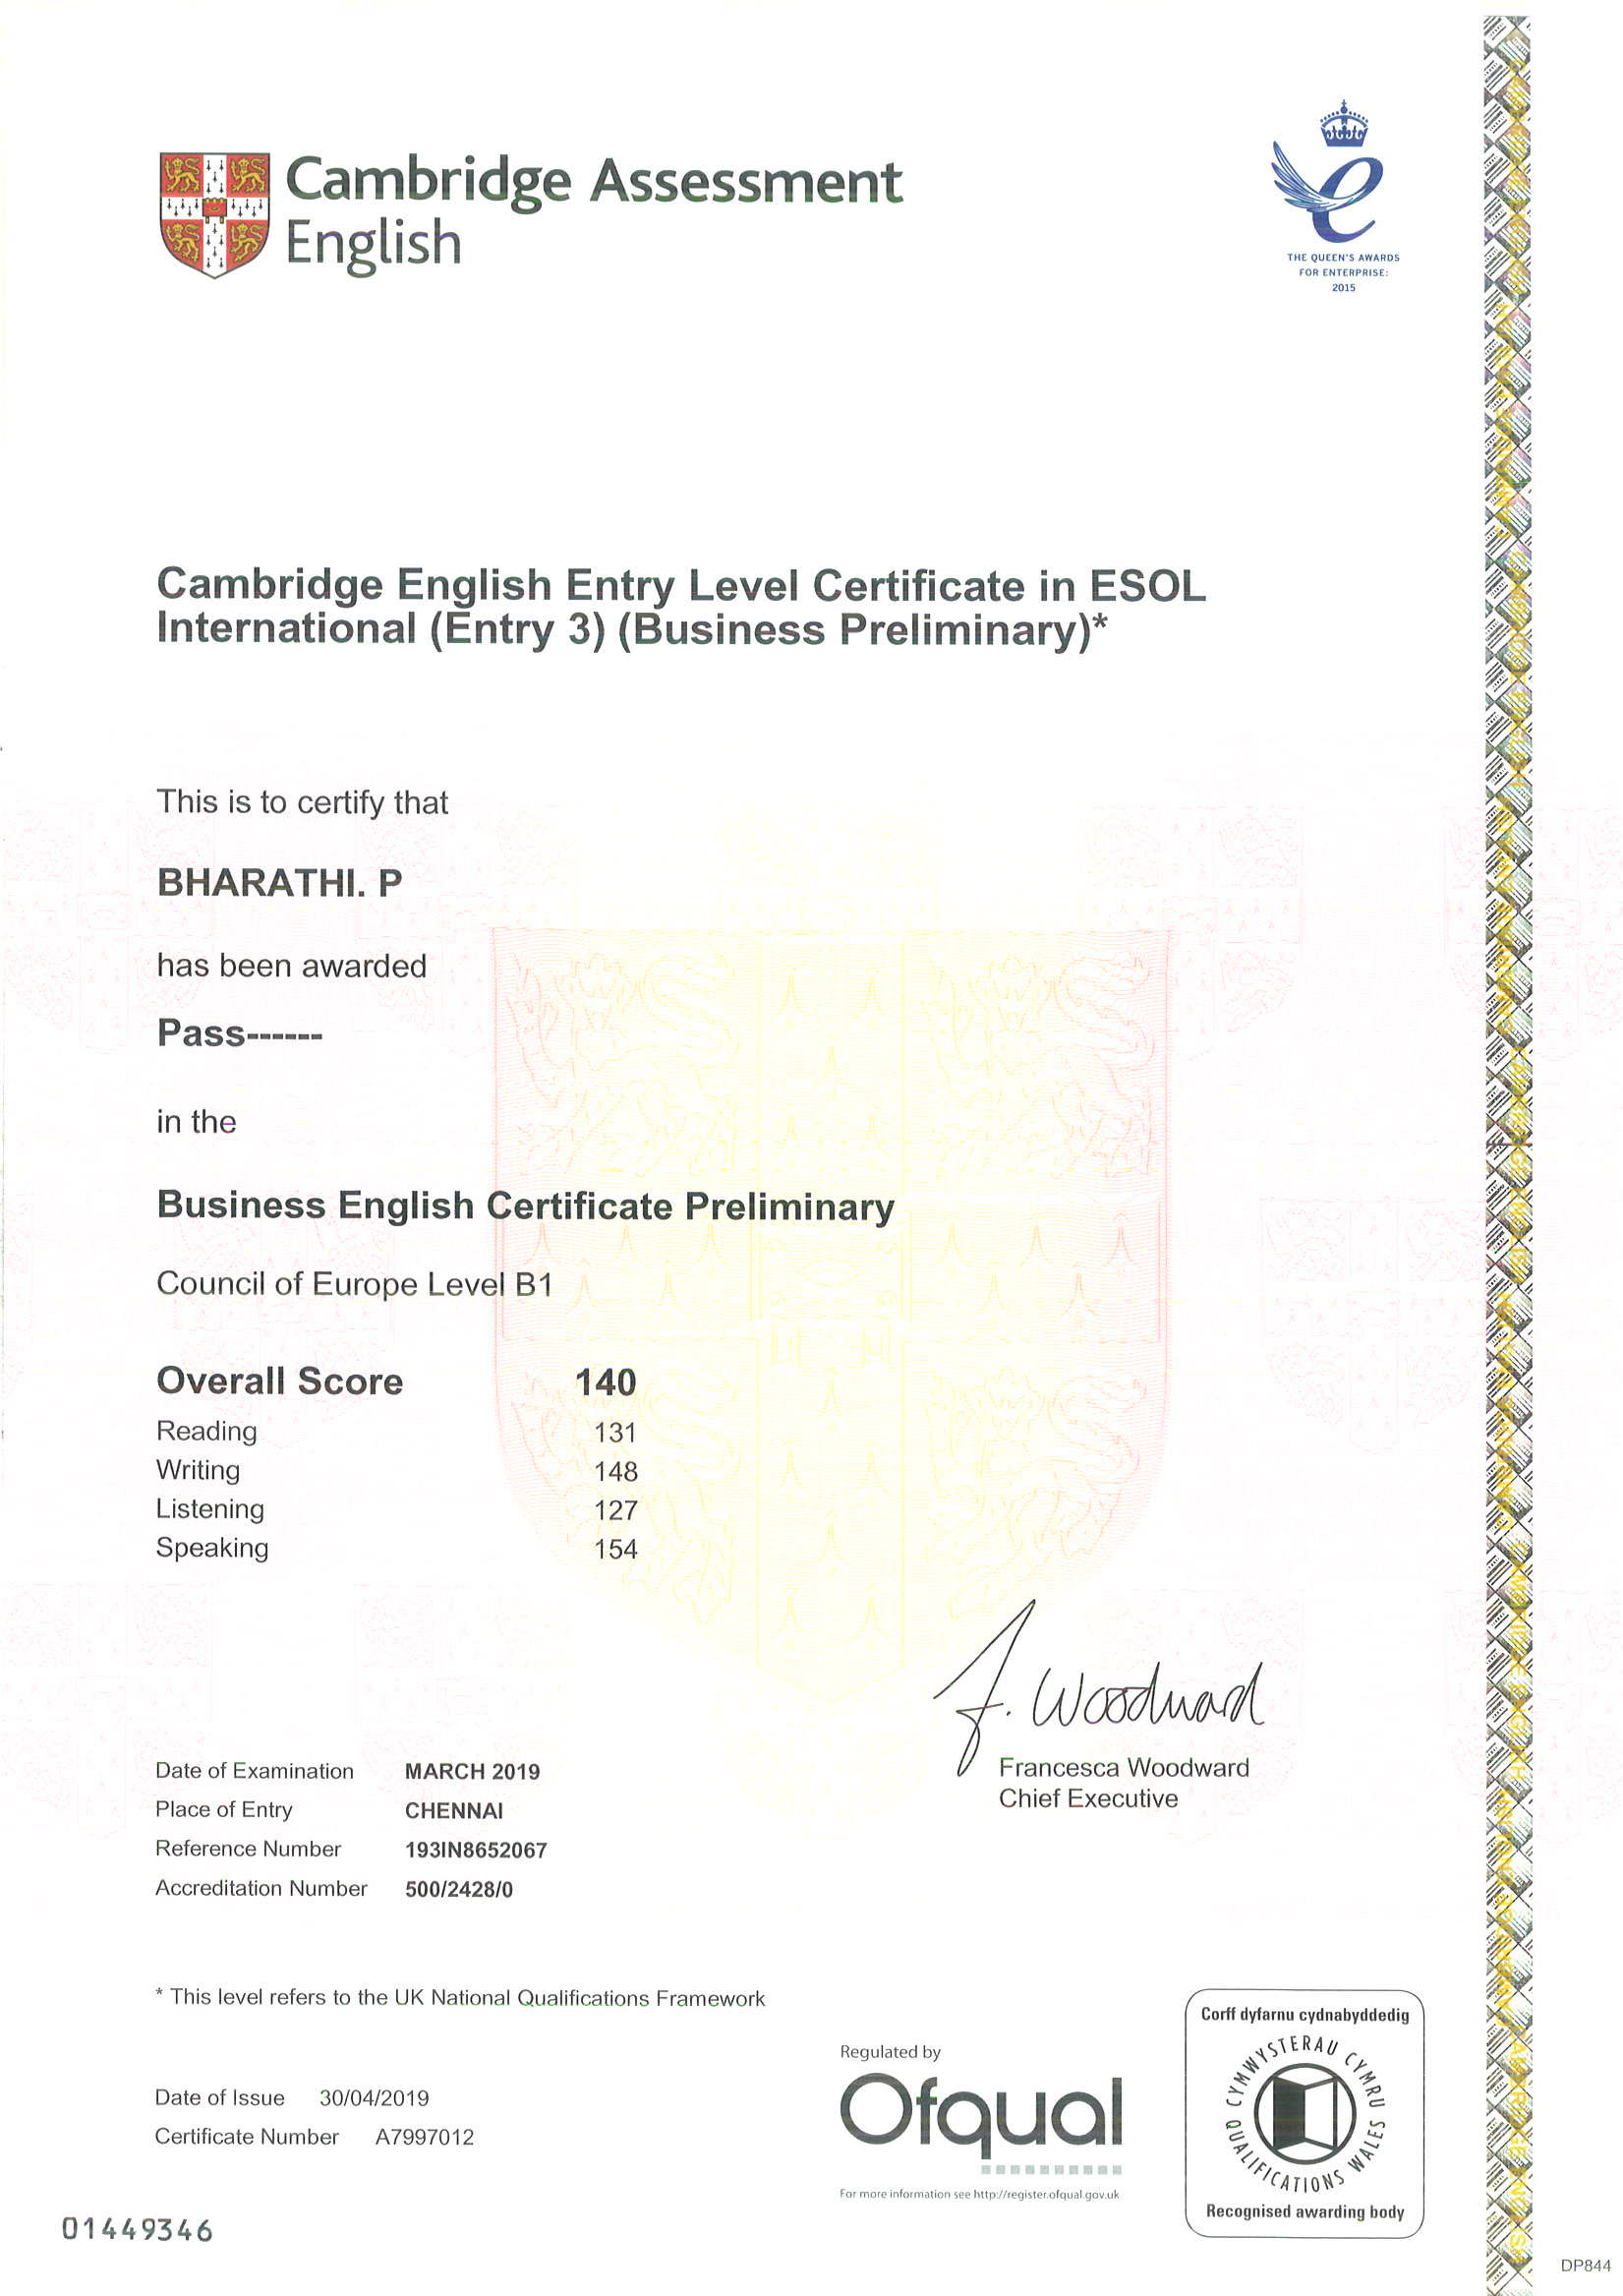 Student Certificate of pass in BEC exam